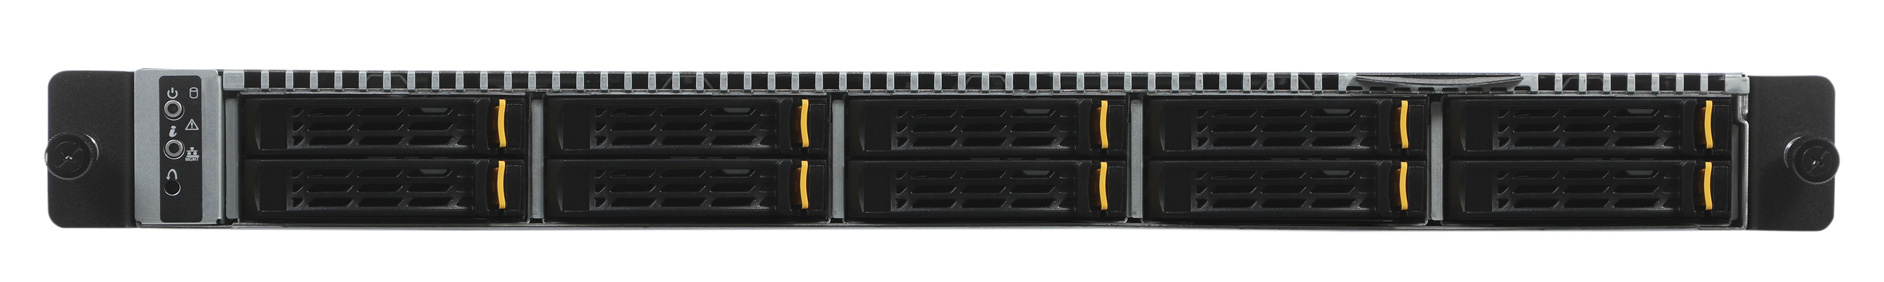 Сервер iRU Rock c1210P, 2xIntel Xeon Gold 6130, 4x32Gb RAM, 2x480Gb SATA SSD, 10x2.5